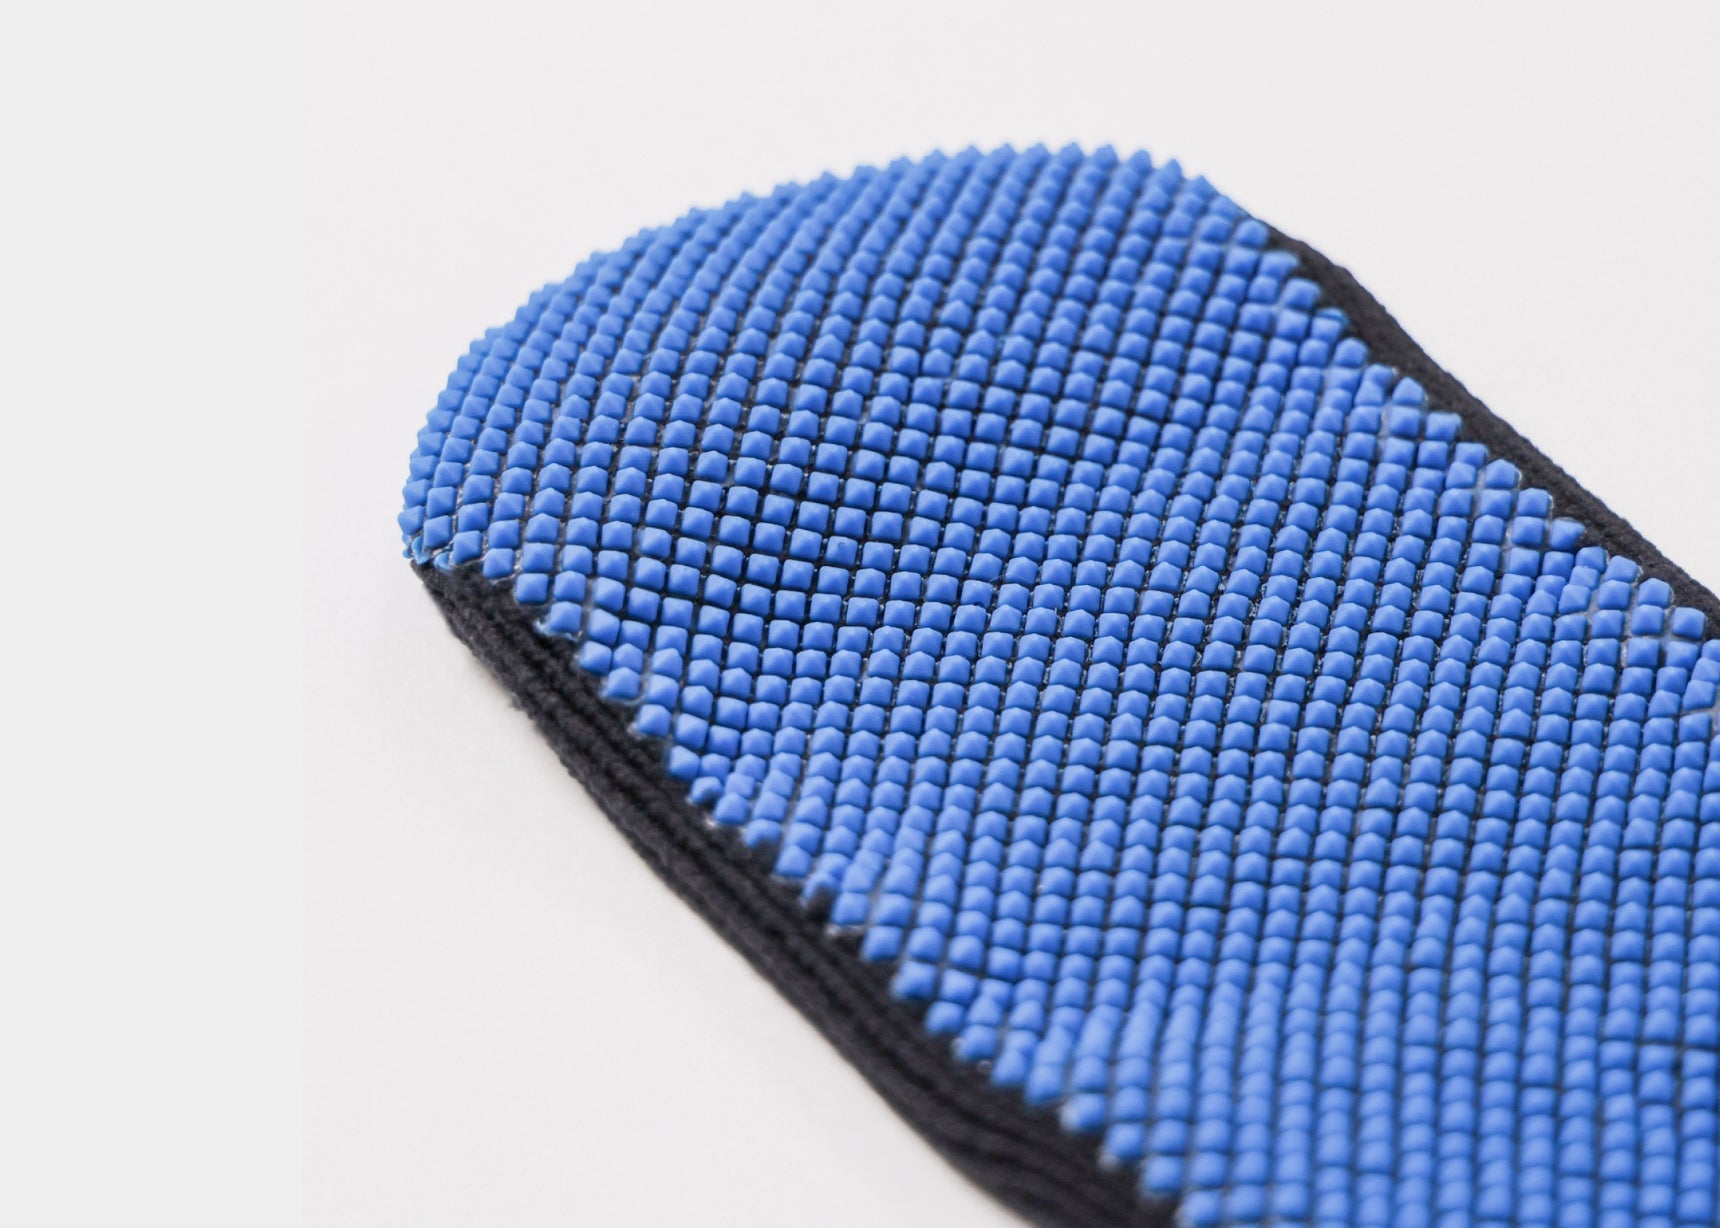 The Naboso neuro-stimulating texture inside the sock